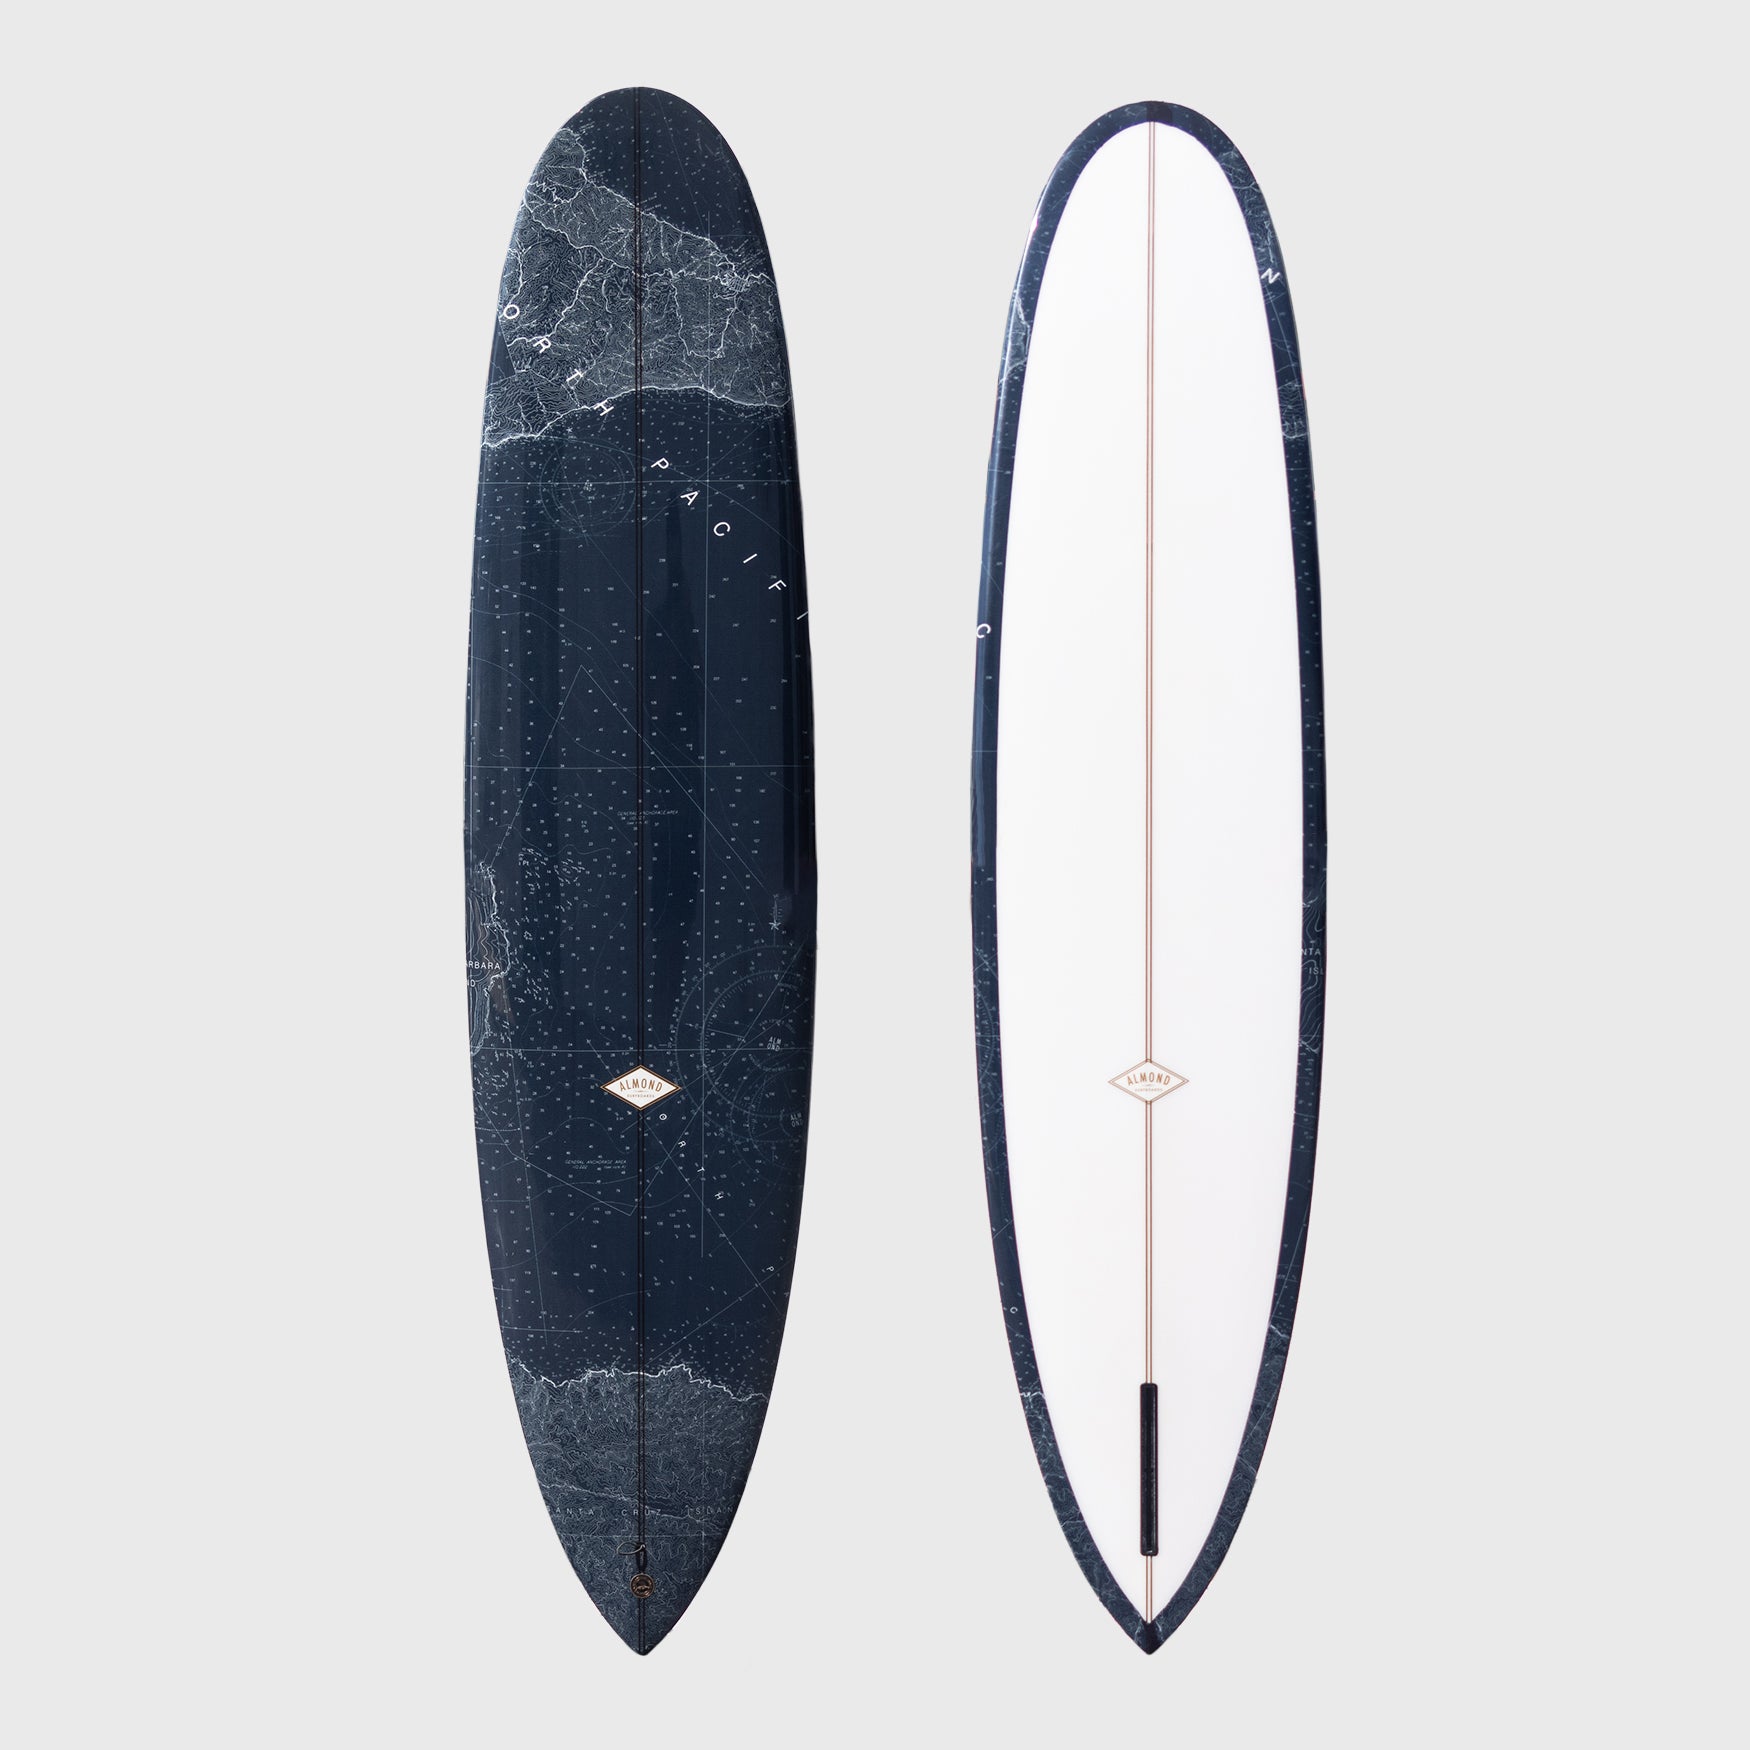 Joy | Almond Surfboards & Designs